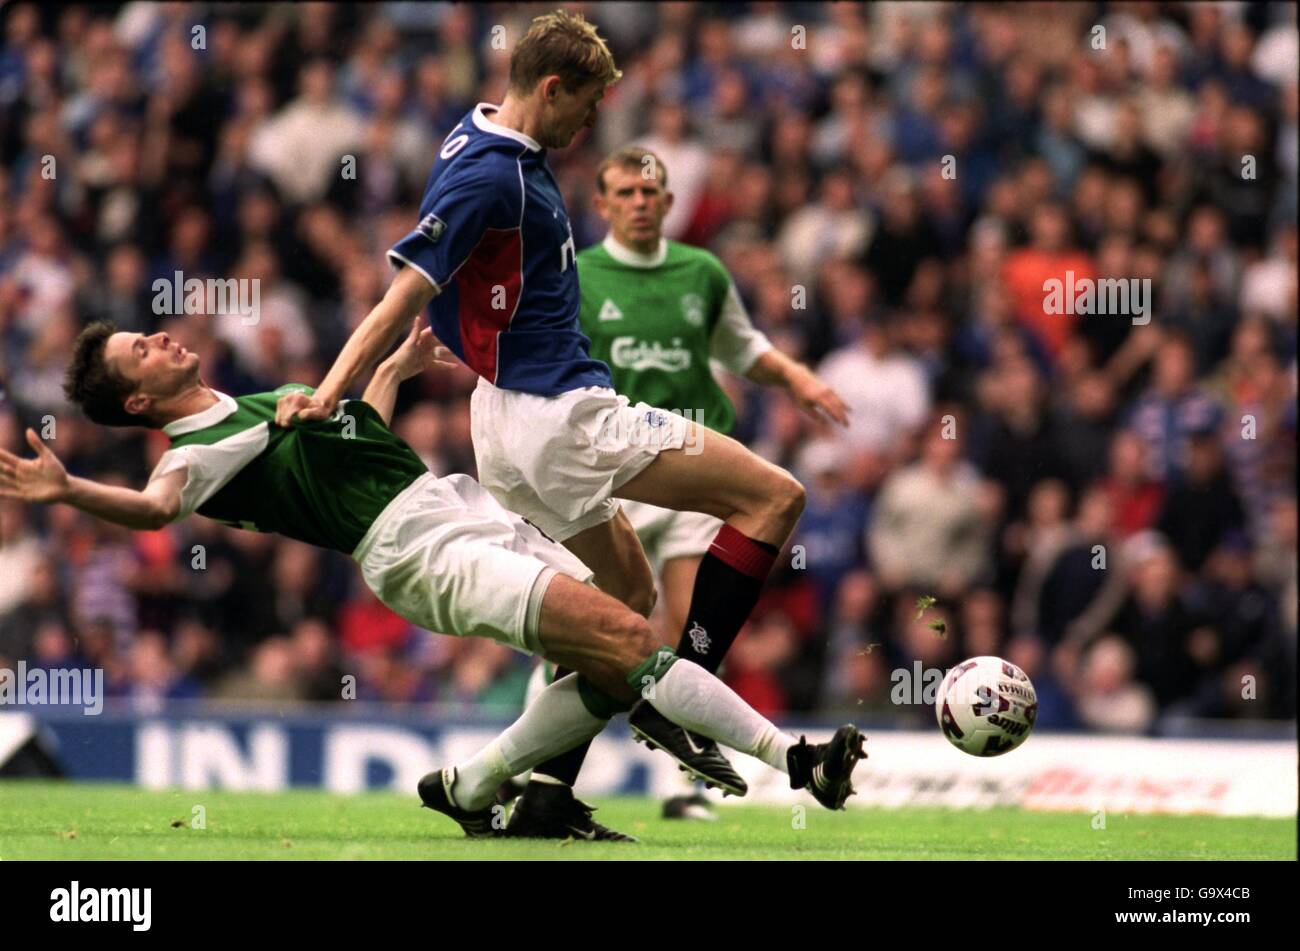 Scottish Soccer - Bank of Scotland Premier League - Rangers v Hibernian. Rangers' Tore Andre Flo (r) holds off Hibernian's Paul Fenwick (l) Stock Photo